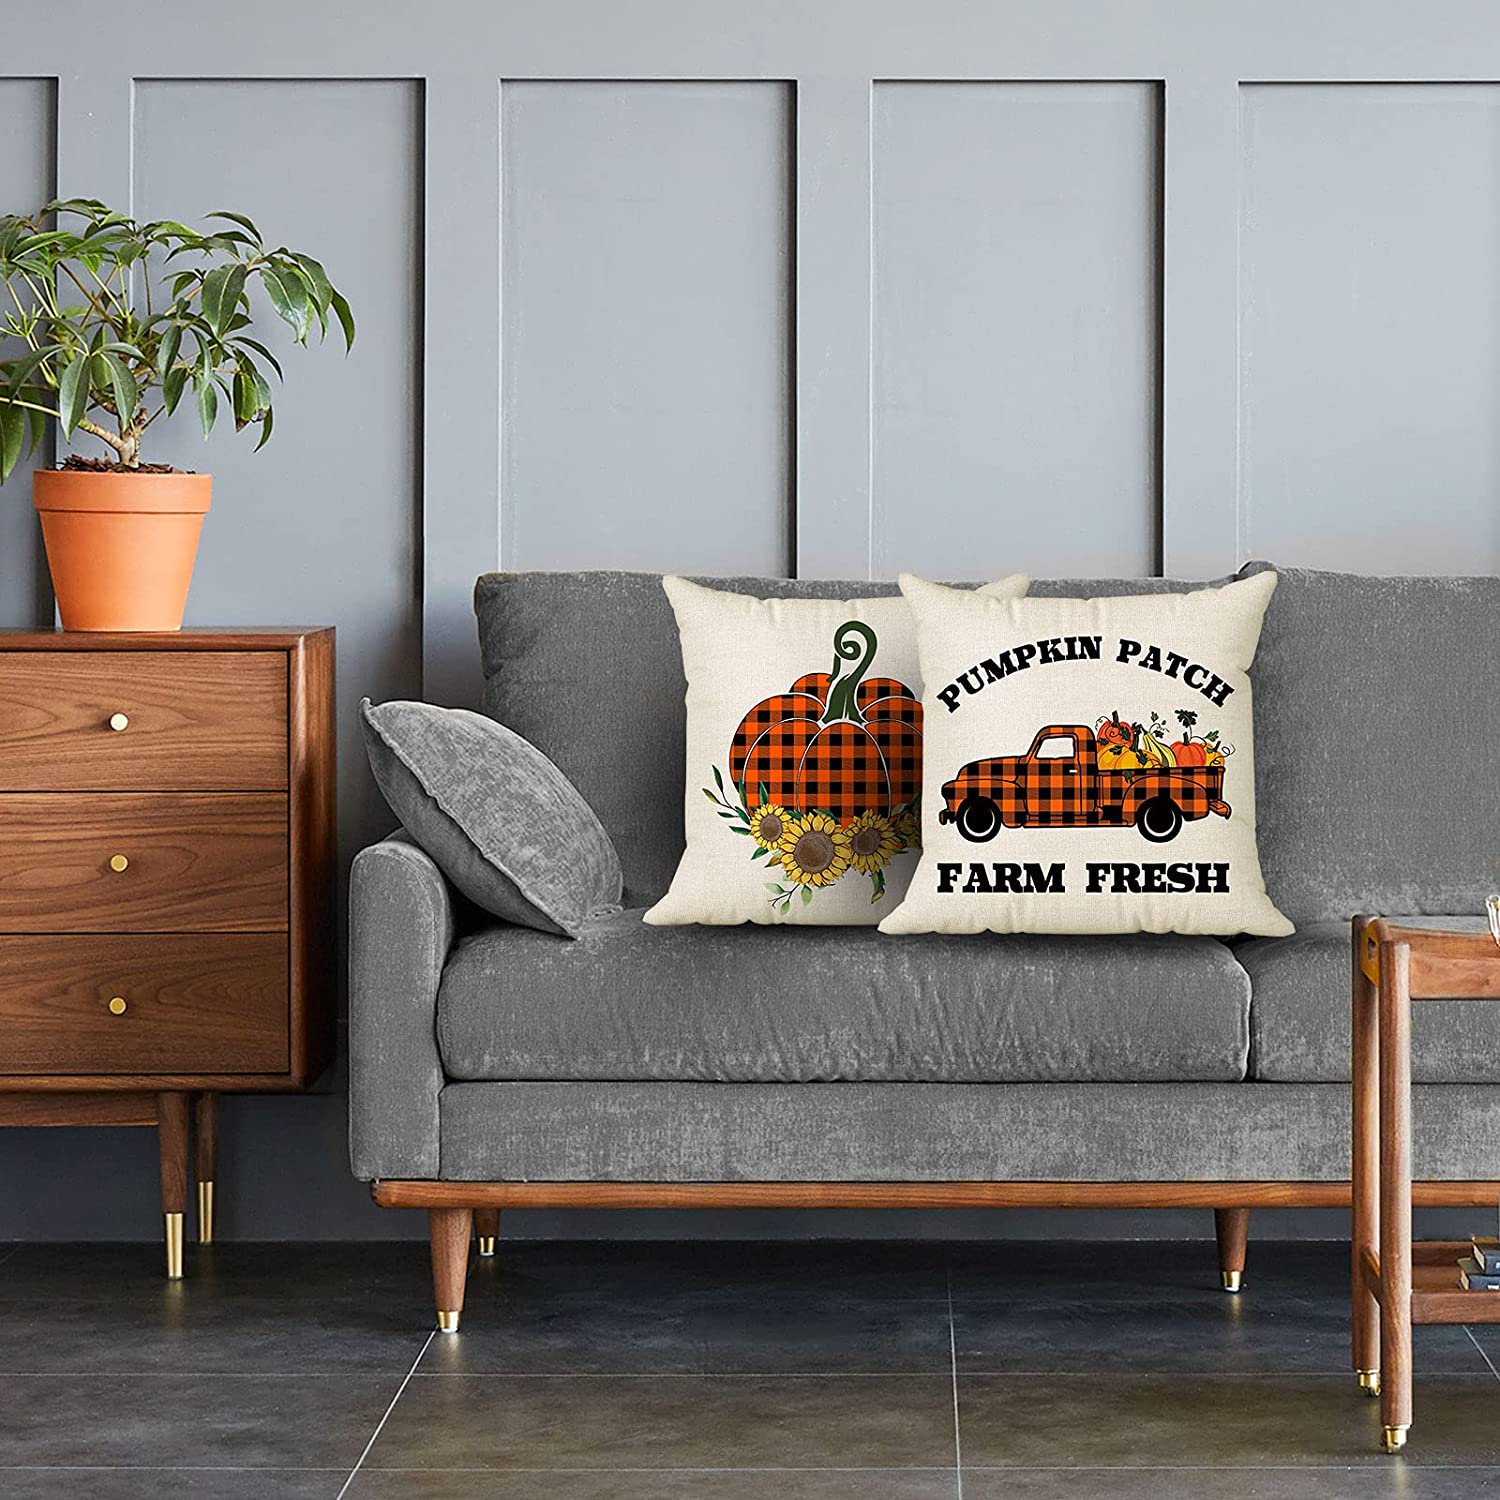 Set of 2 Farmhouse Fall Pillow Covers 18 x 18 (Check, Truck, Pumpkin)